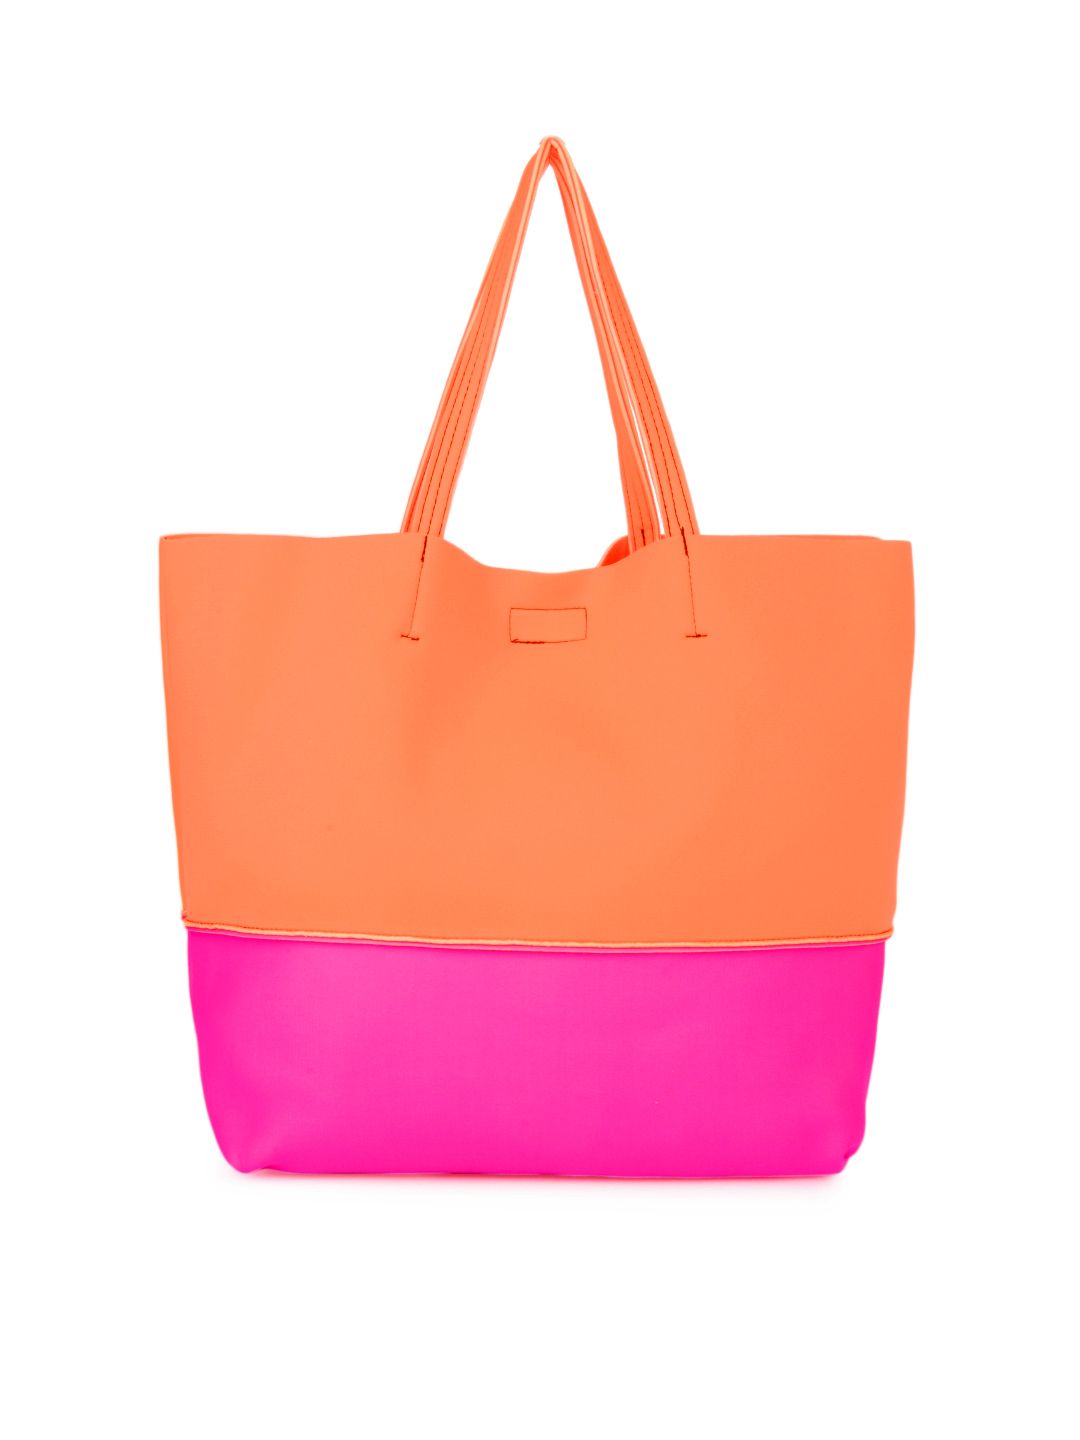 Buy Steve Madden Women Neon Orange & Pink Bsoftee Tote Bag - 294 - Accessories for Women - 141759